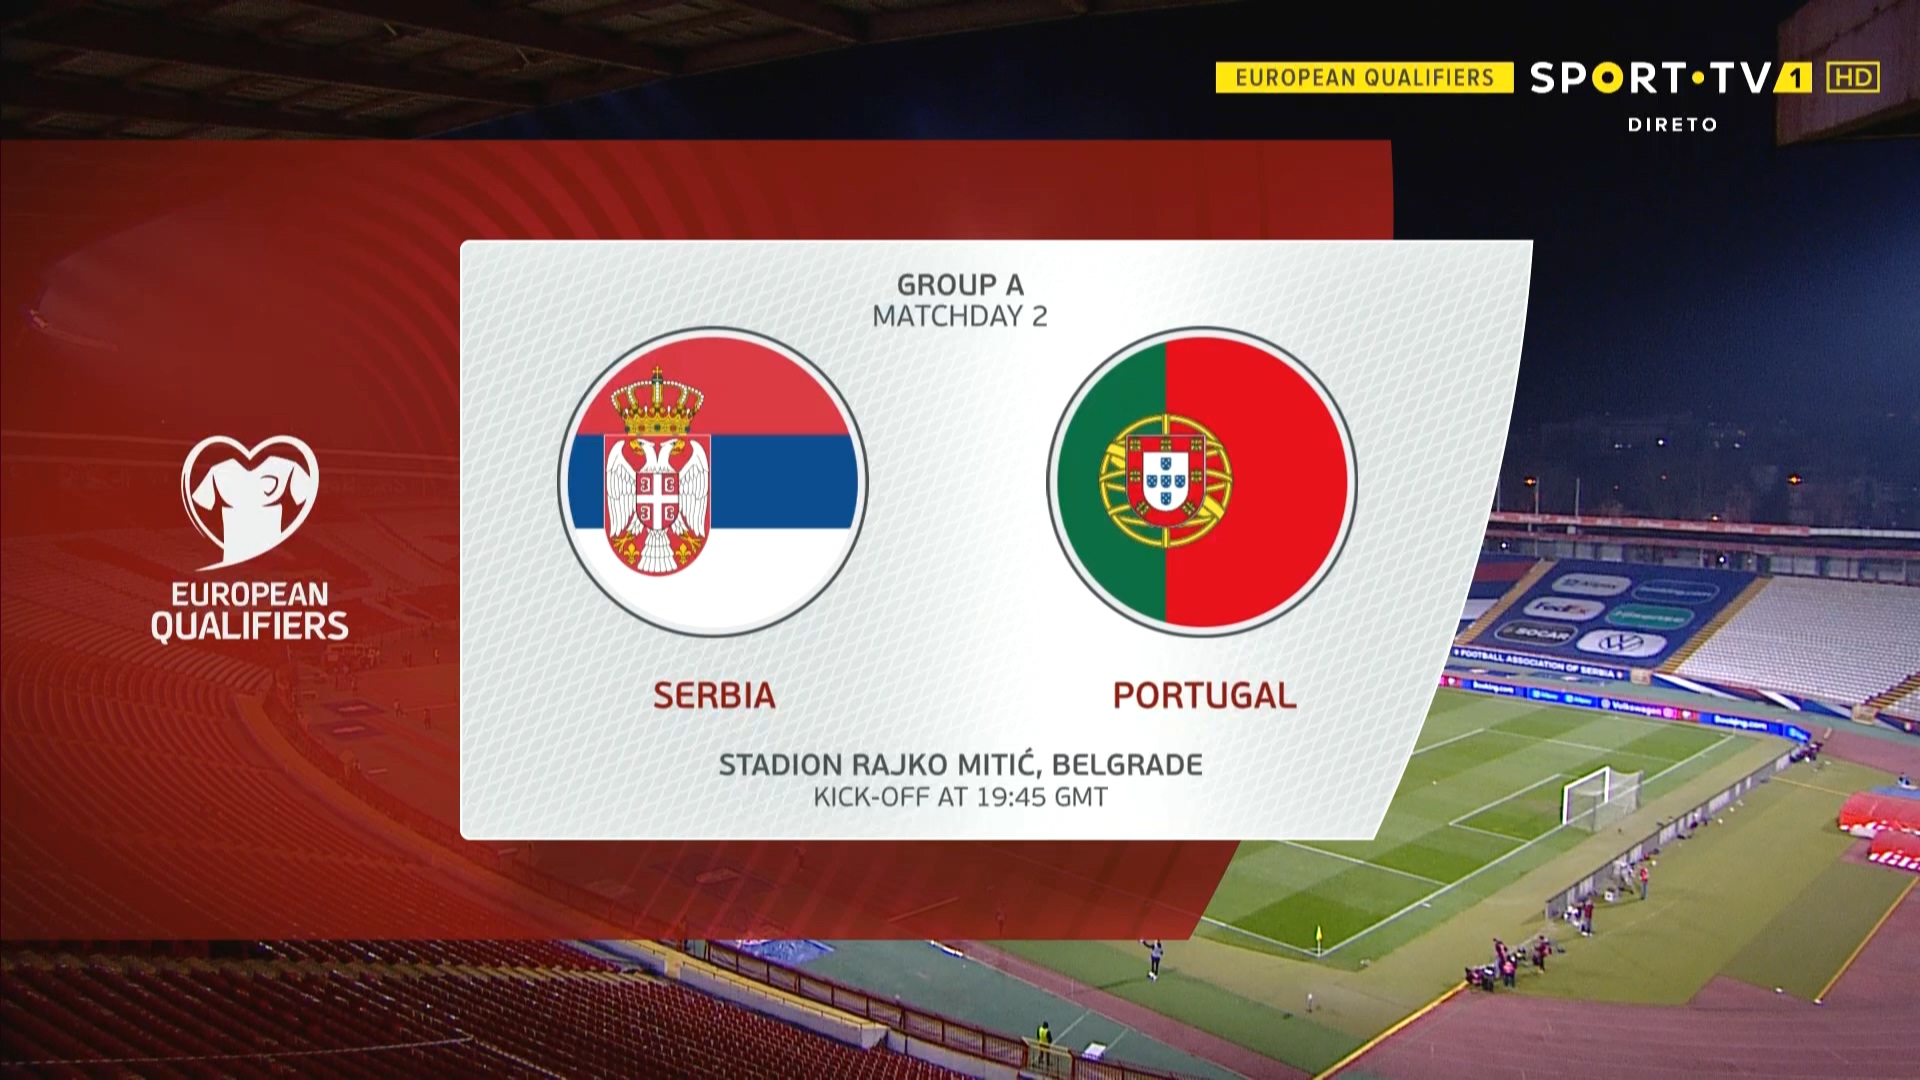 FUTBOL: World Cup 2022 Qualifiers - Serbia vs Portugal - 27/03/2021